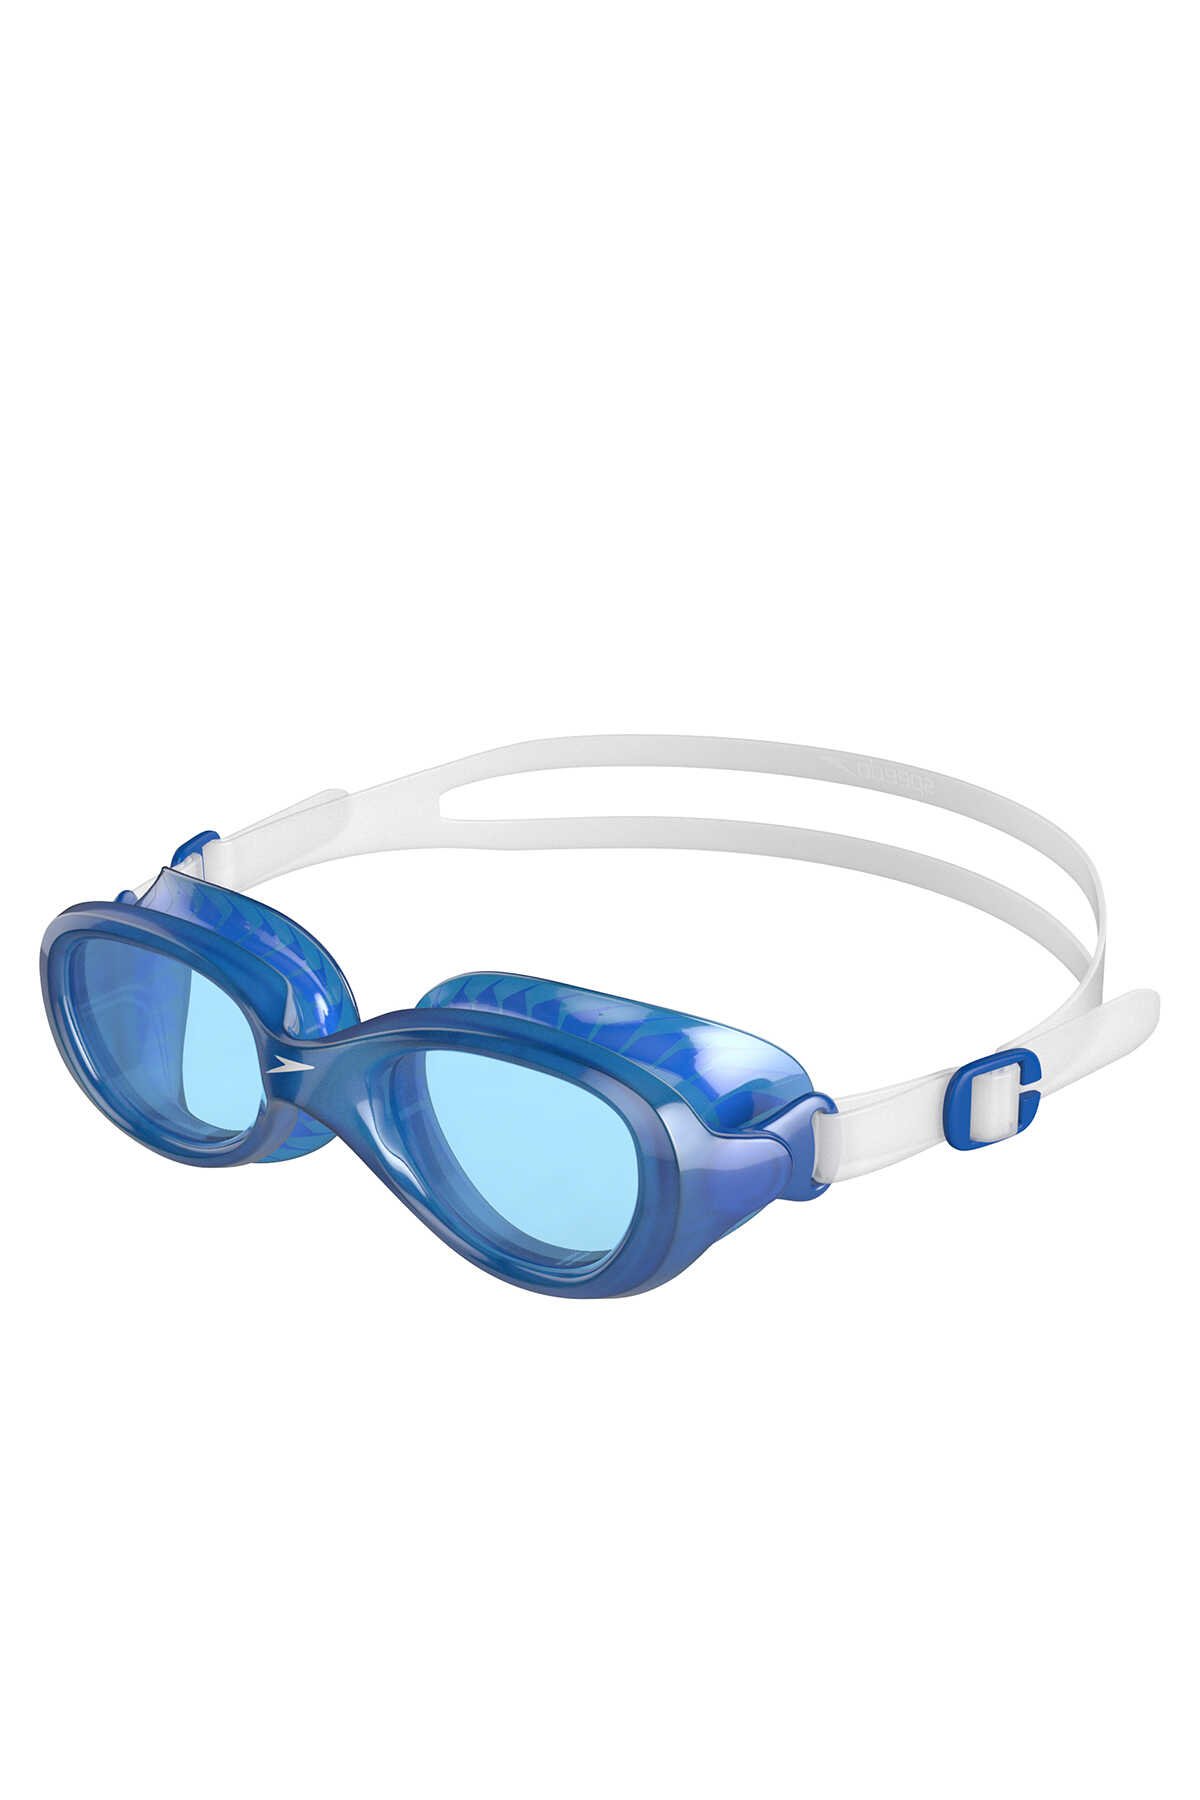 Speedo - Speedo FUTURA CLASSIC JU Yüzücü Gözlüğü Mavi